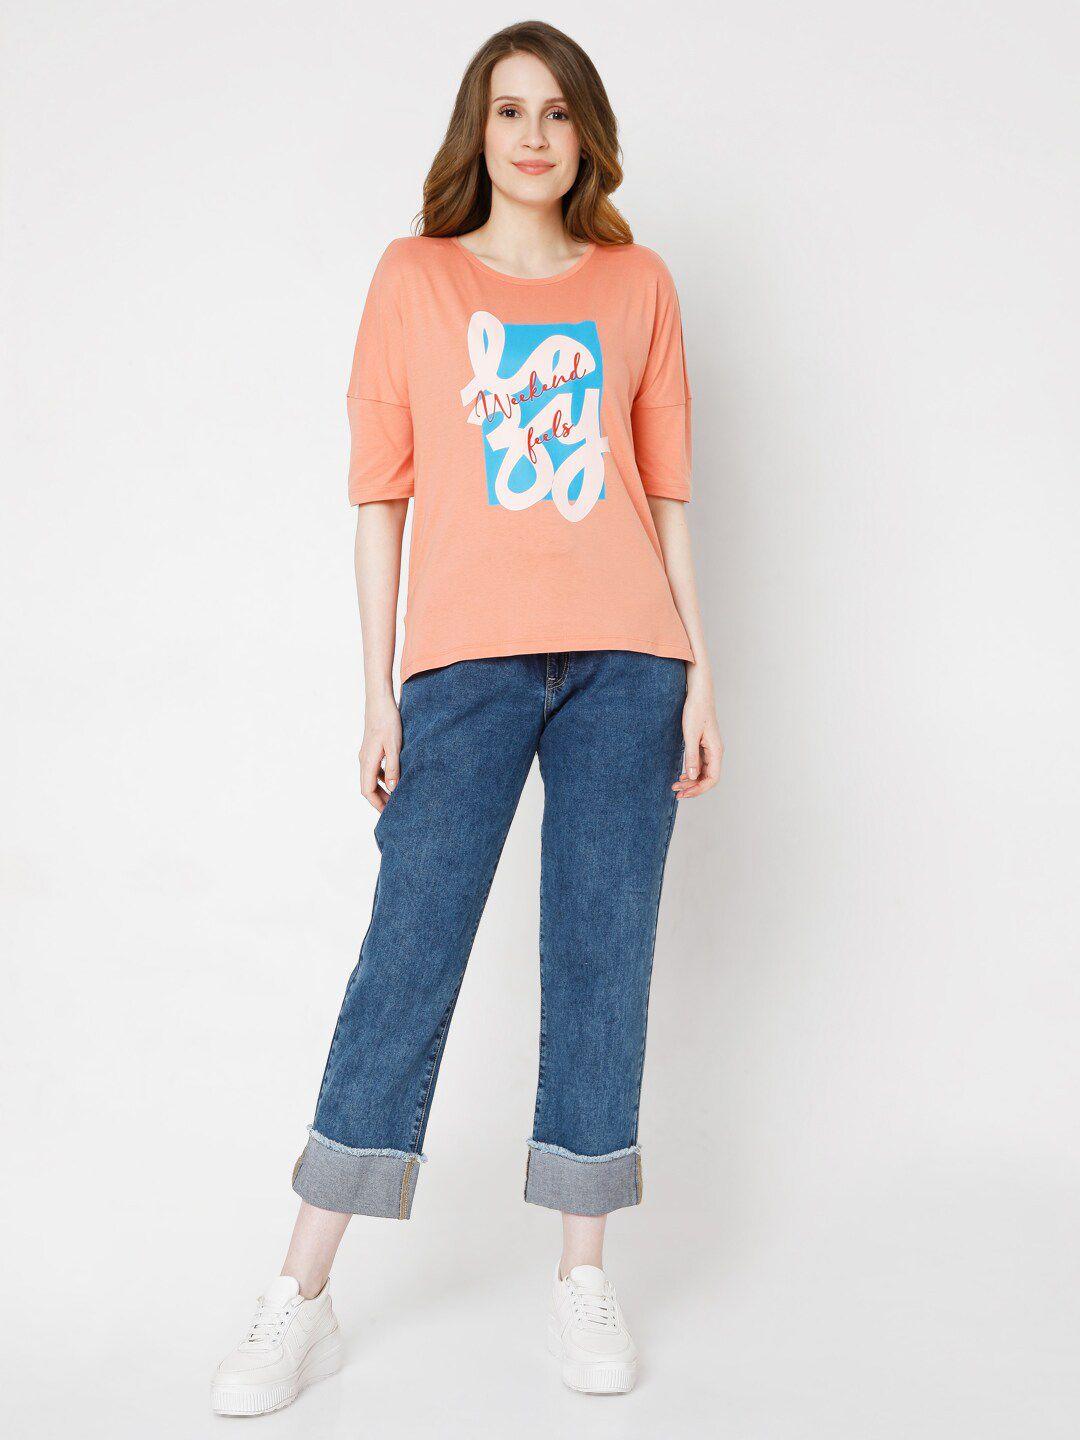 Vero Moda Women Orange Typography Printed T-shirt